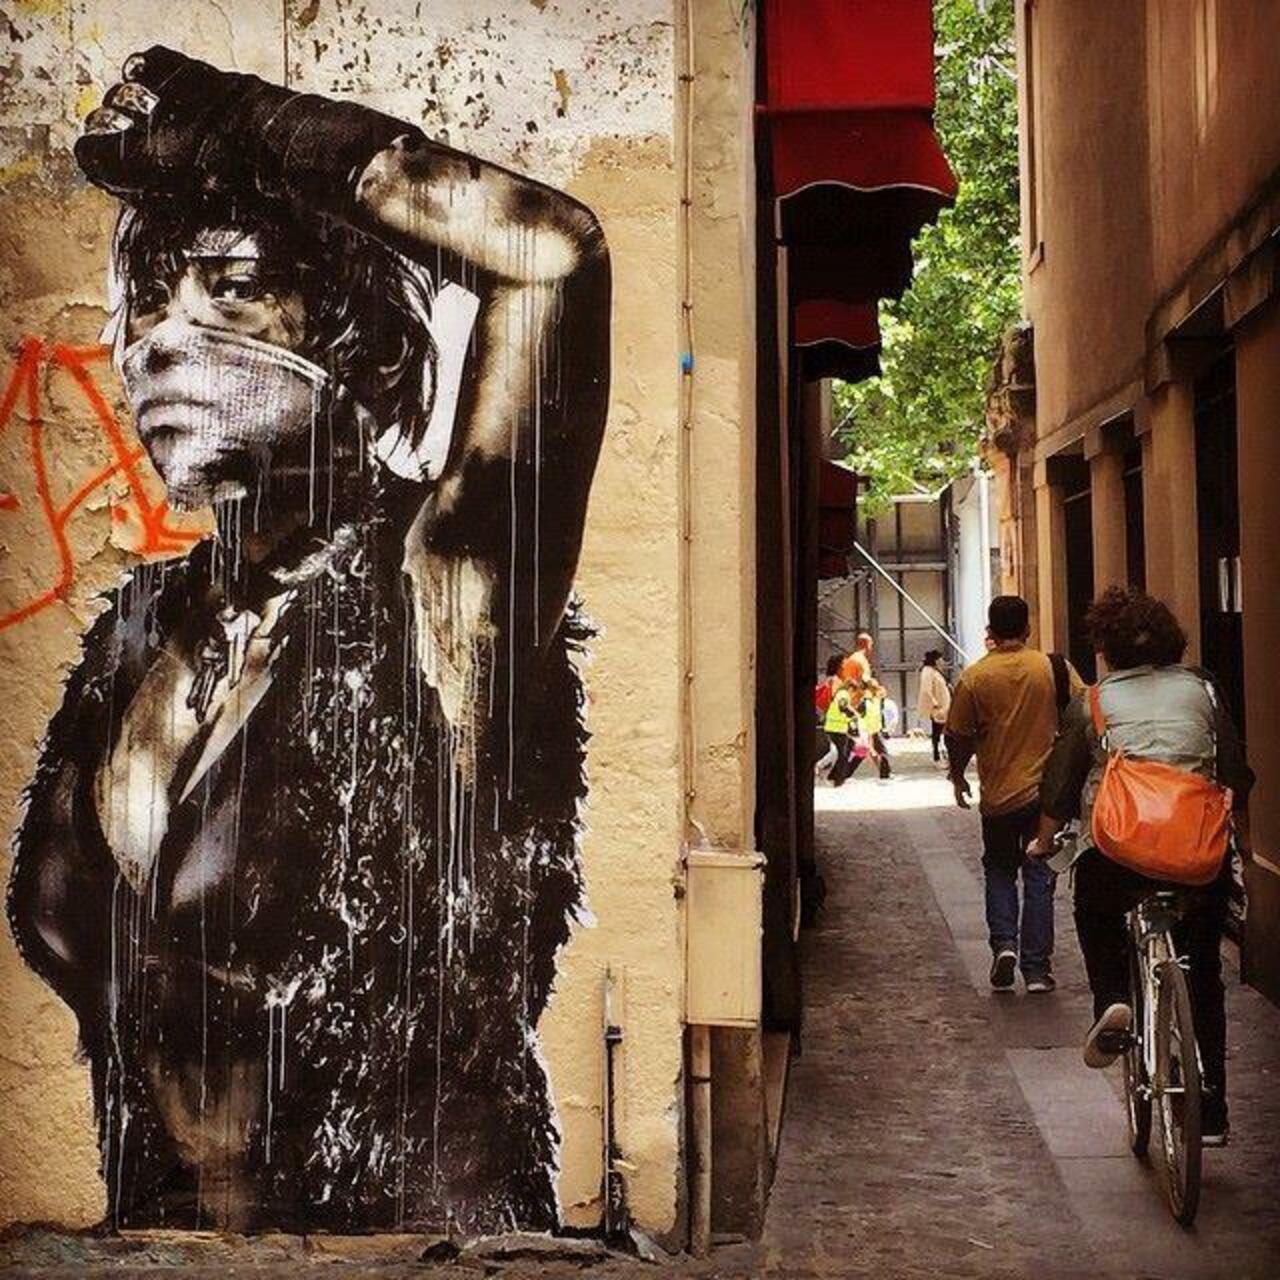 Street Art by Eddie Colla in Paris 

#art #arte #graffiti #streetart http://t.co/gkccEZIl9b